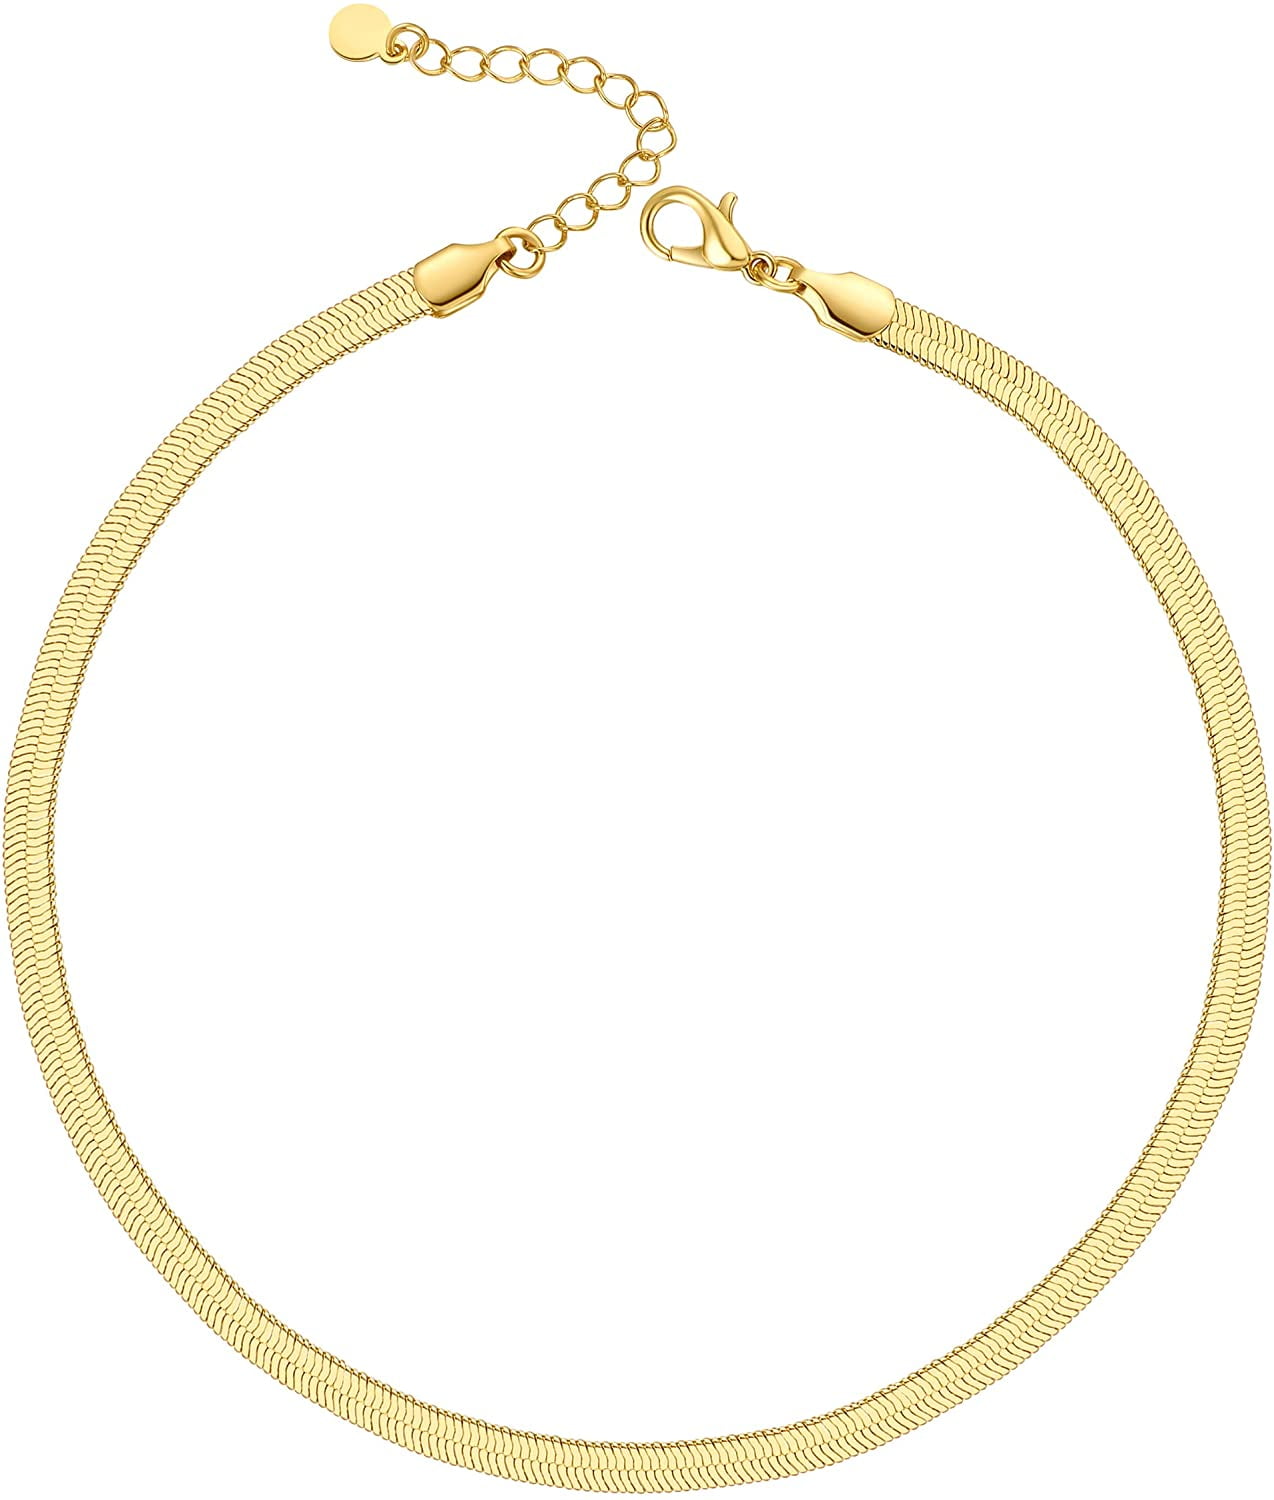 NUZON Gold Snake Chain Bracelet for Women Girls 14K Gold Plated Adjustable  5MM Flat Flexible Herringbone Link Bracelet Charm Minimalist Jewelry for